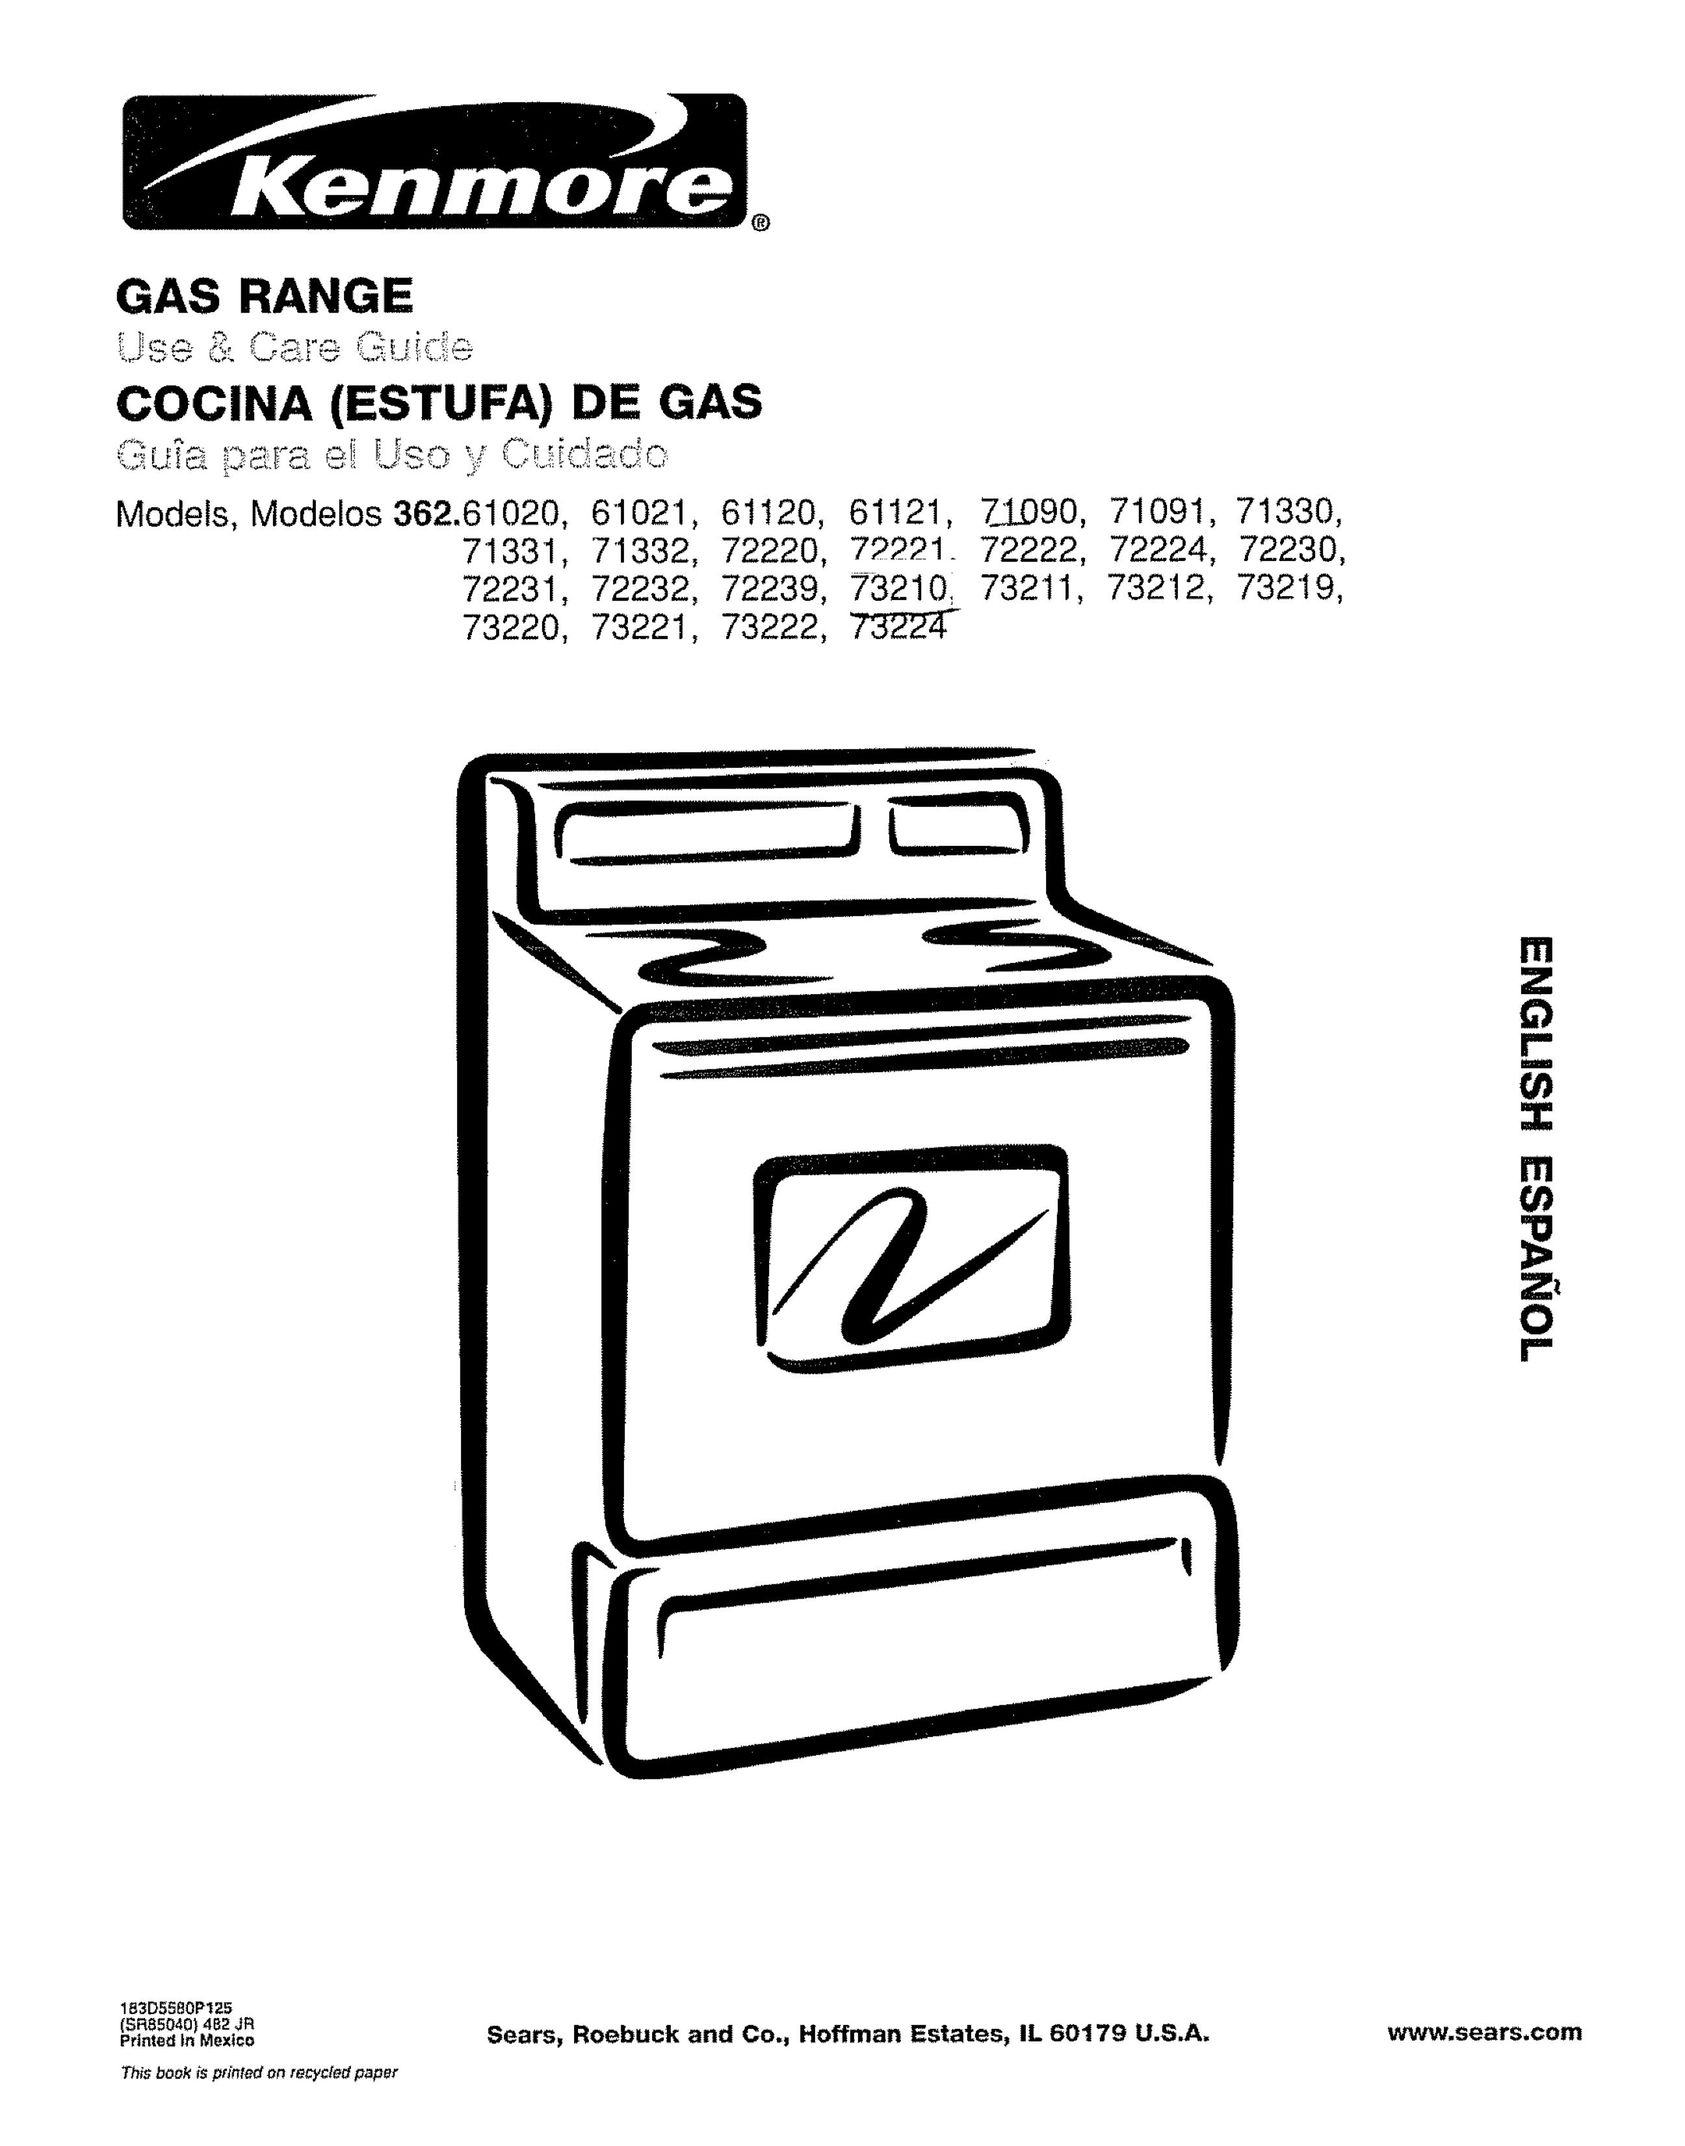 Kenmore 362.72222 Range User Manual